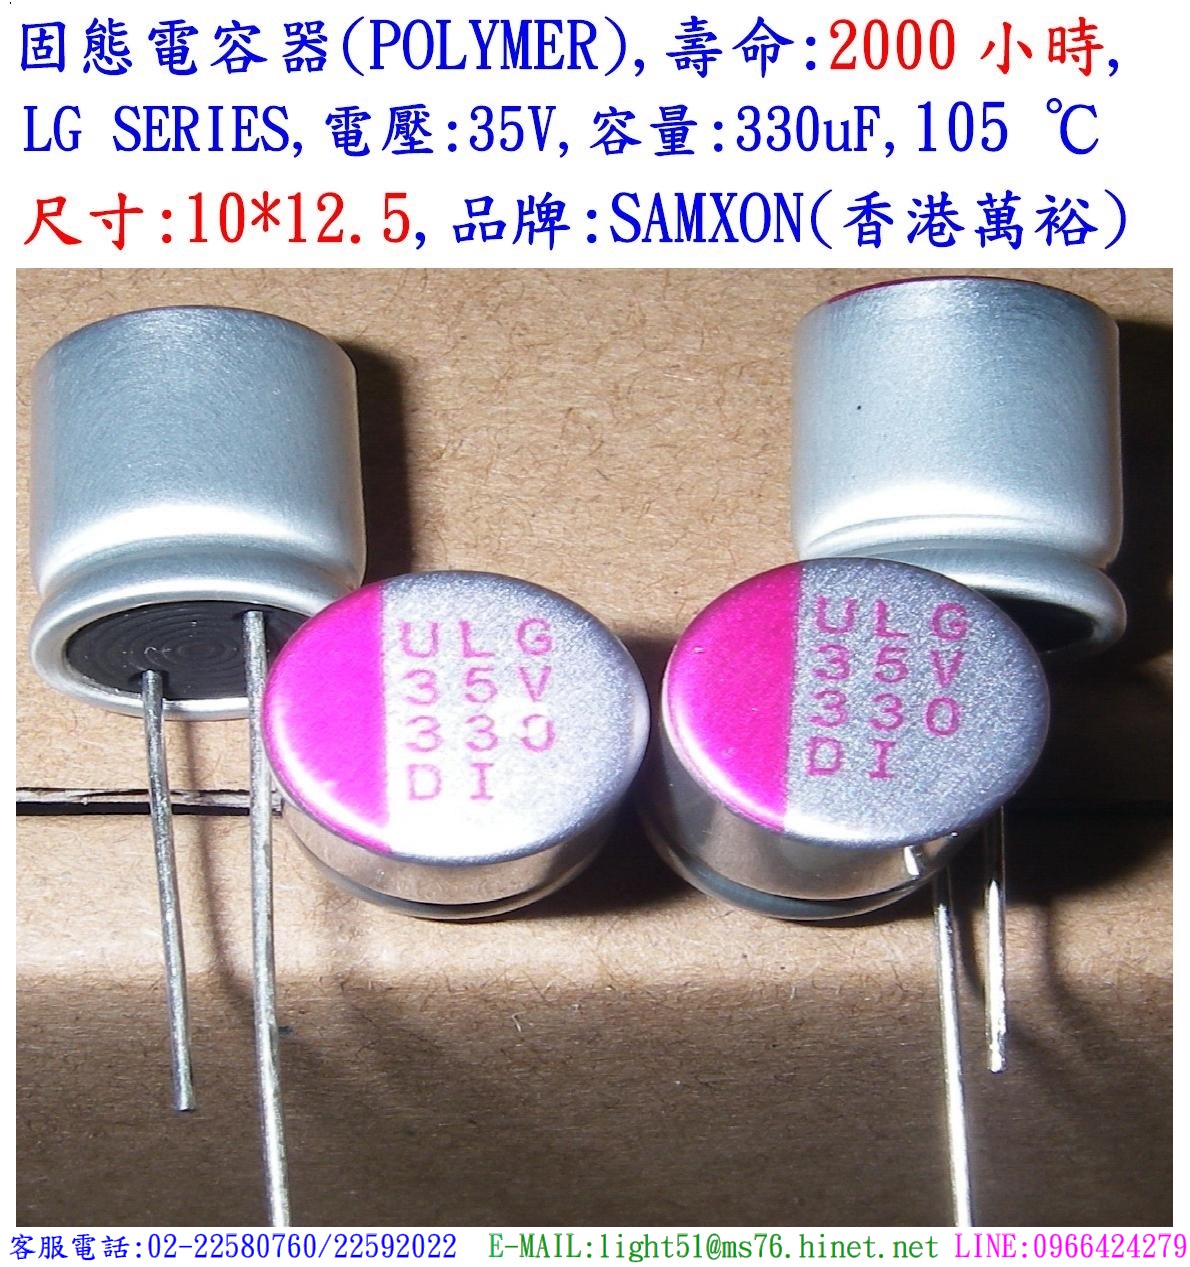 LG,35V,330uf,尺寸10*12.5,固態電容器(Hybird),壽命2000小時,SAMXON(香港萬裕)